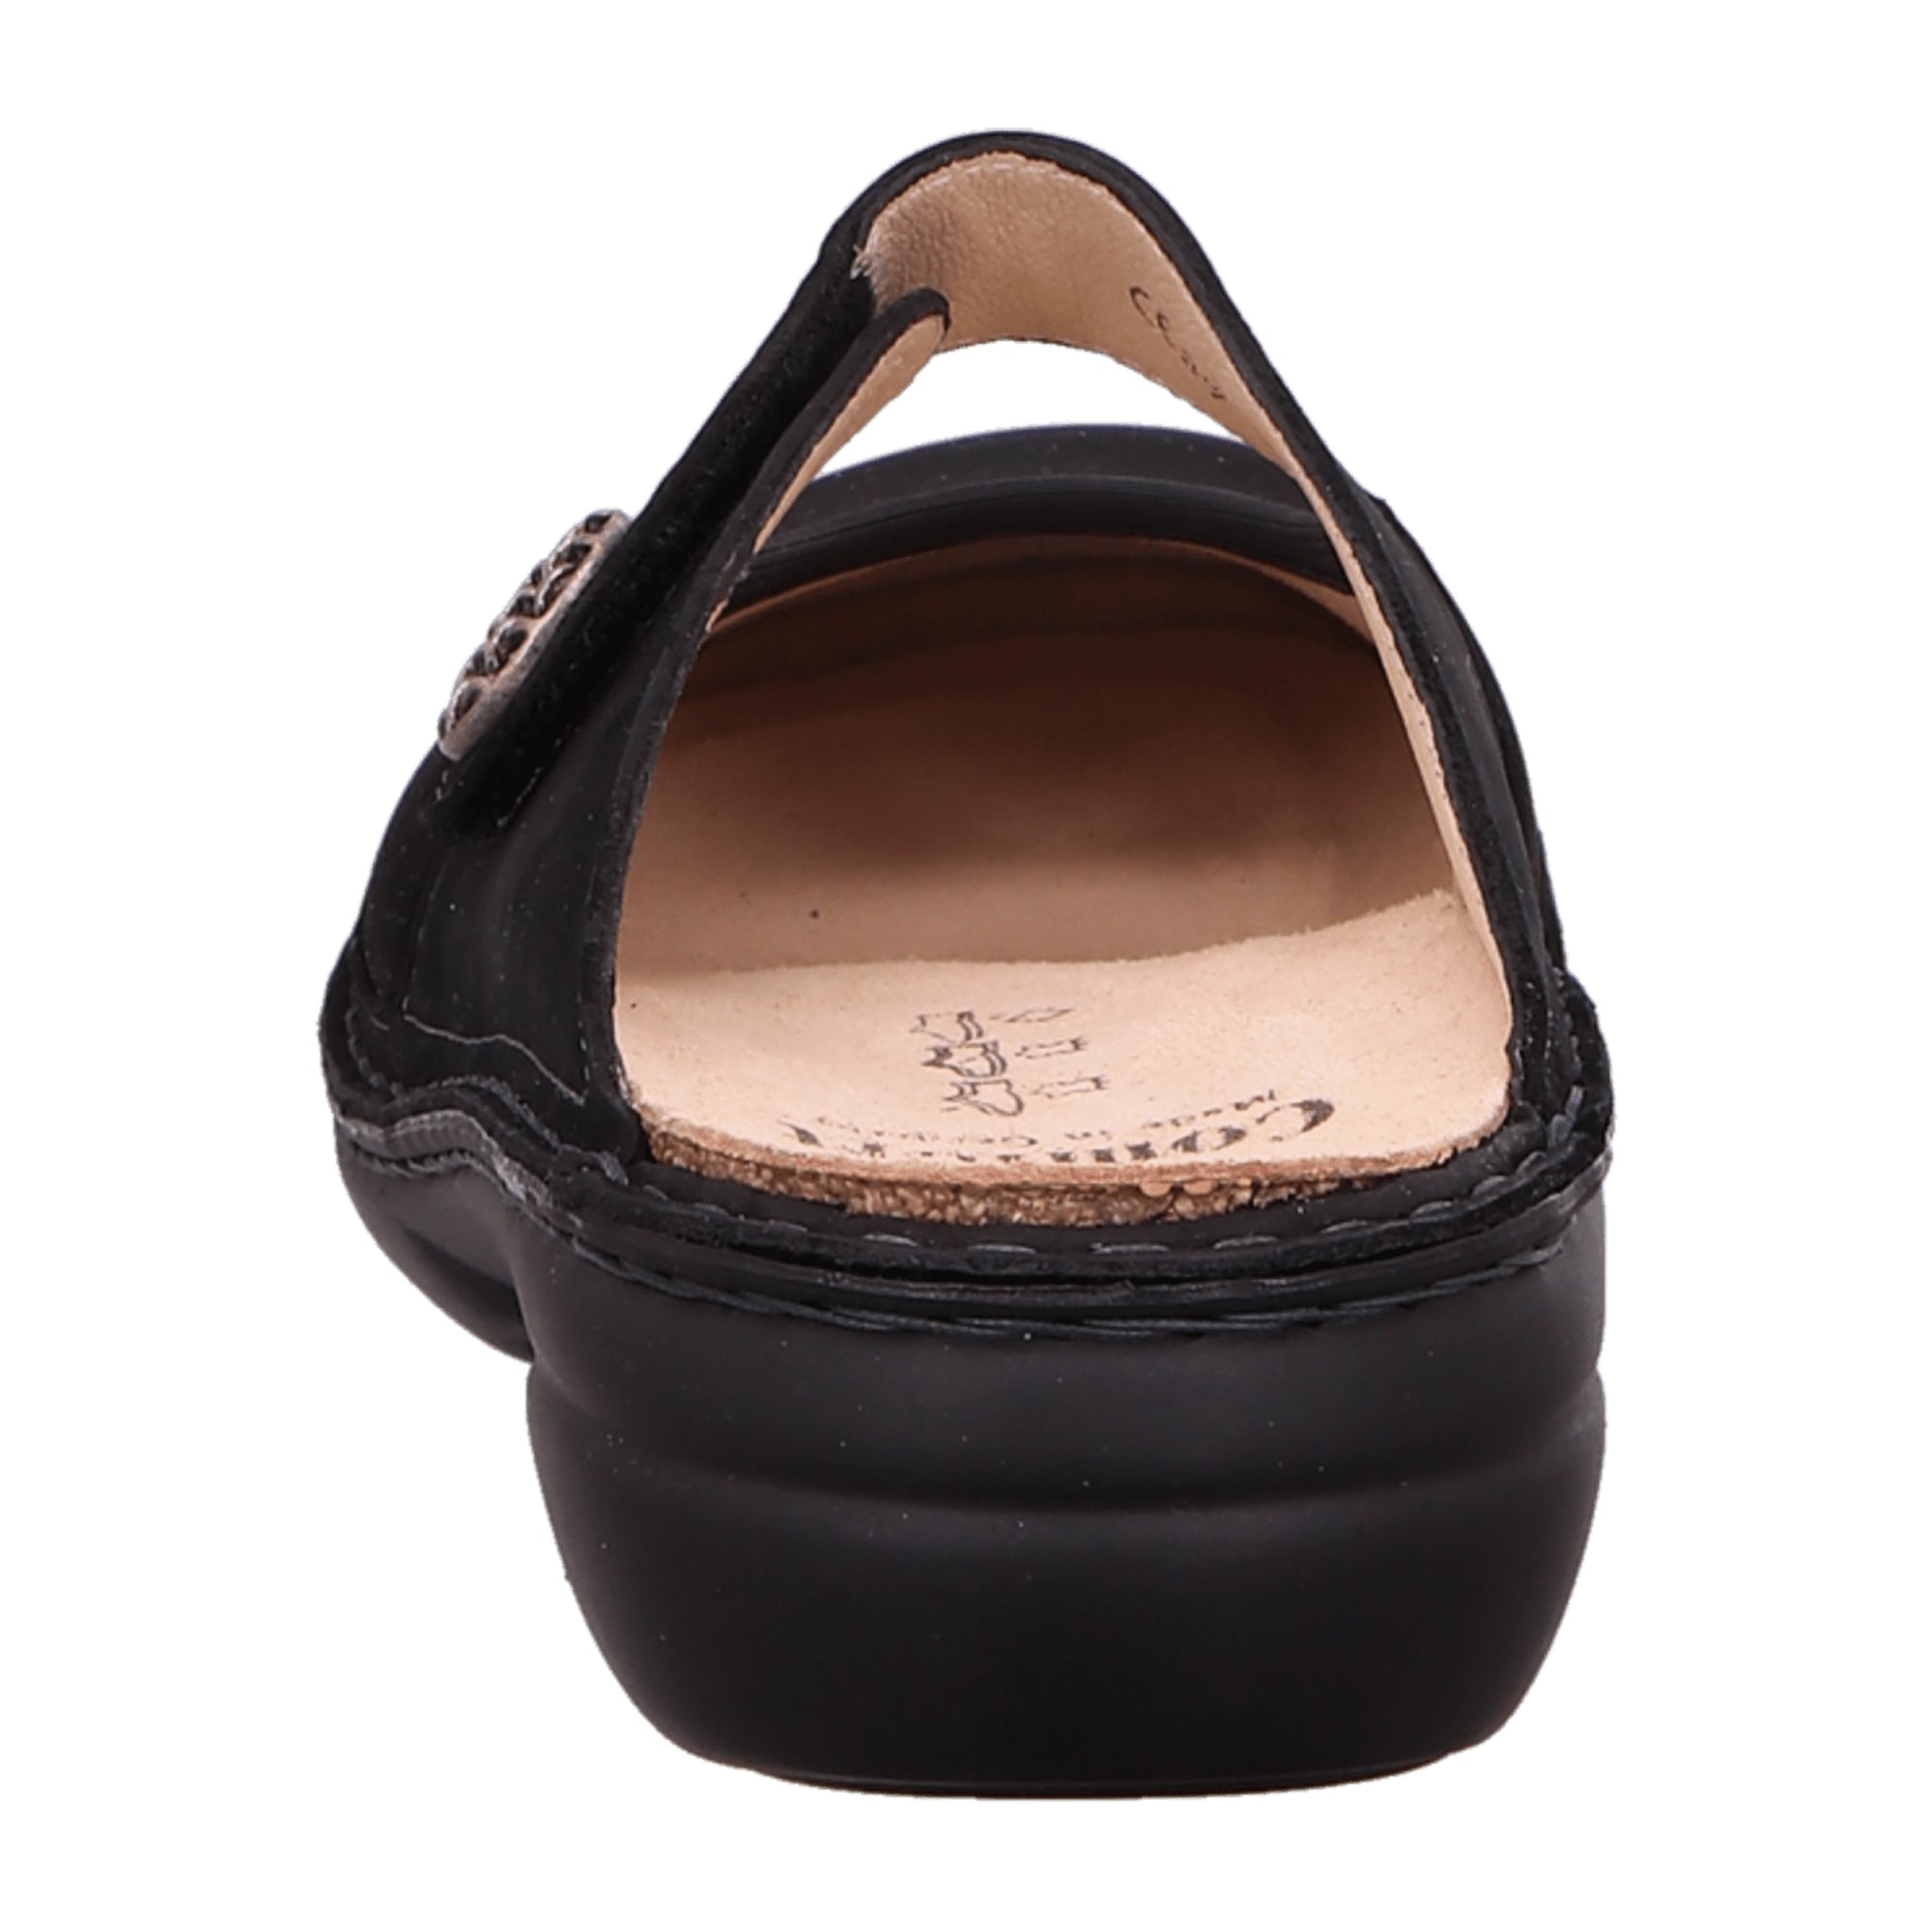 Finn Comfort Asinara Women's Comfort Shoes, Black - Stylish & Durable